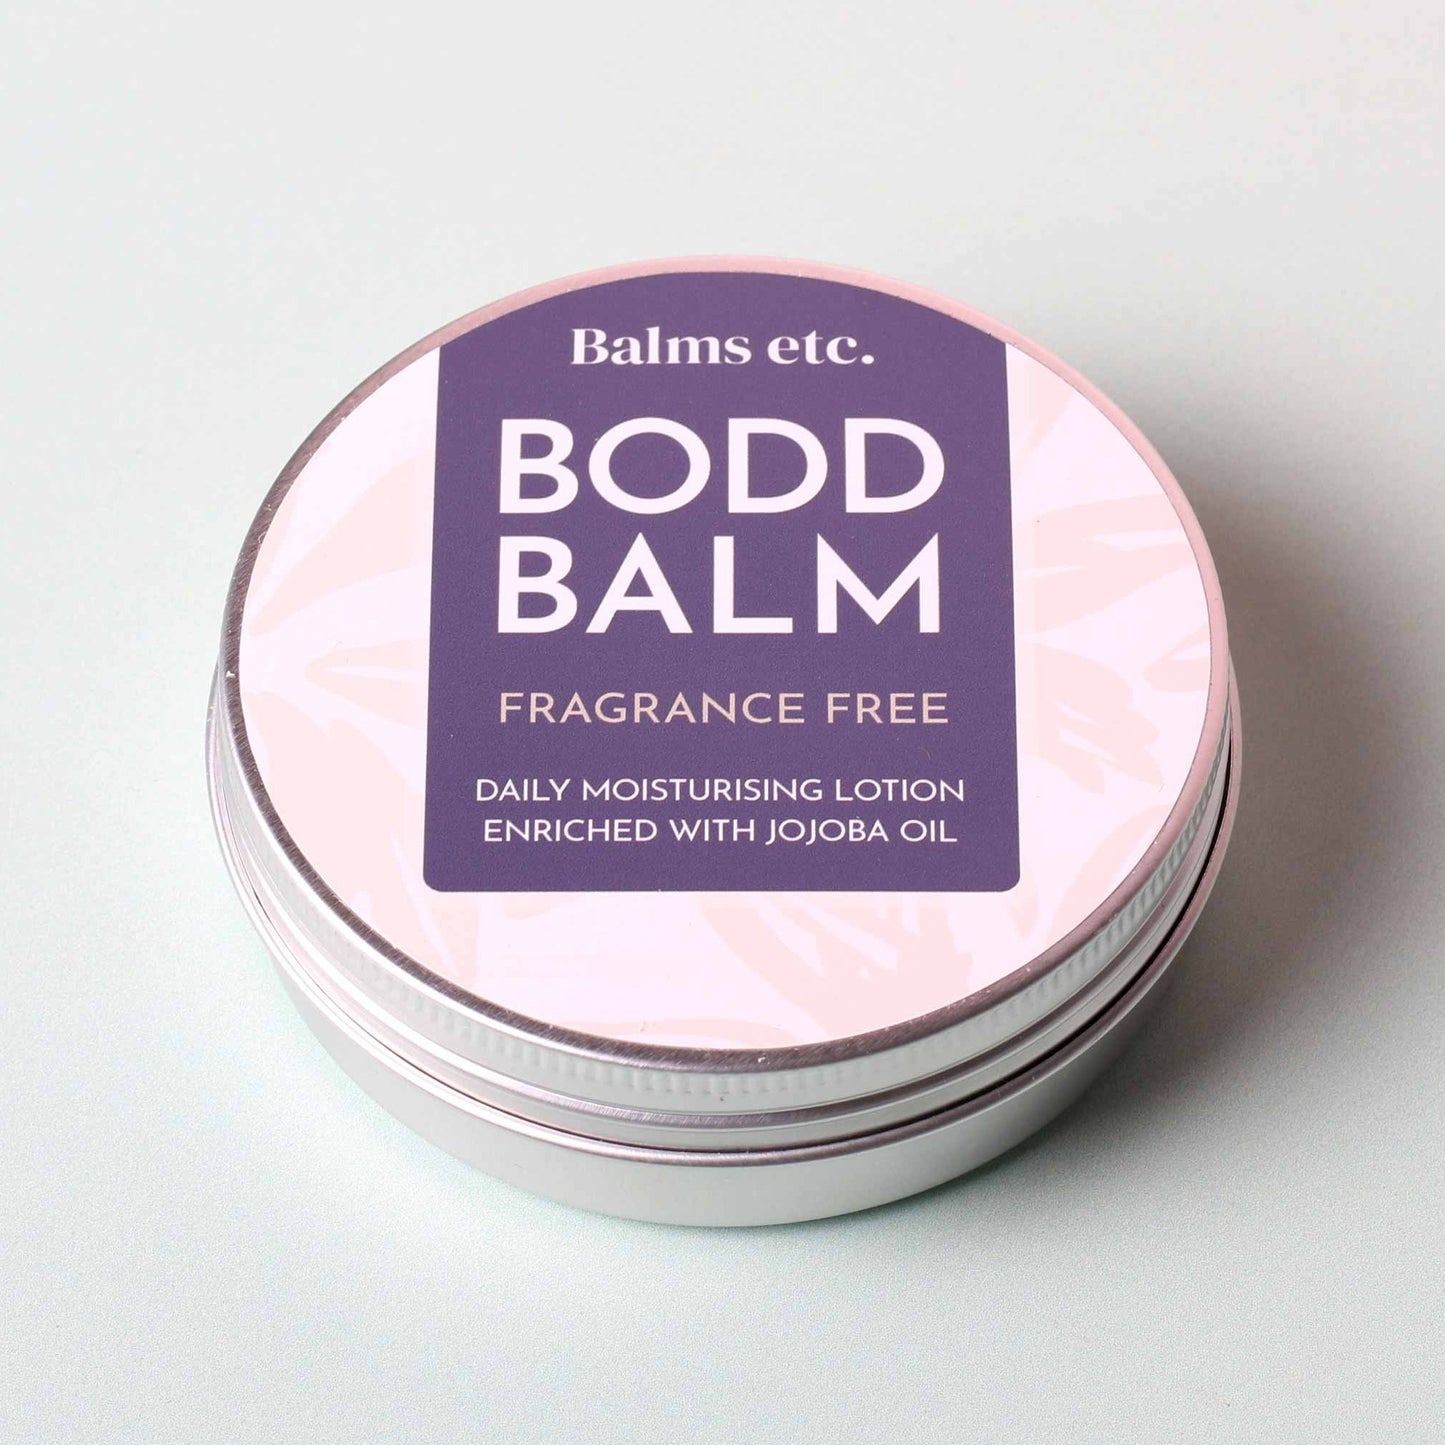 Balms etc. BODD BALM - Fragrance Free Daily Moisturising Lotion